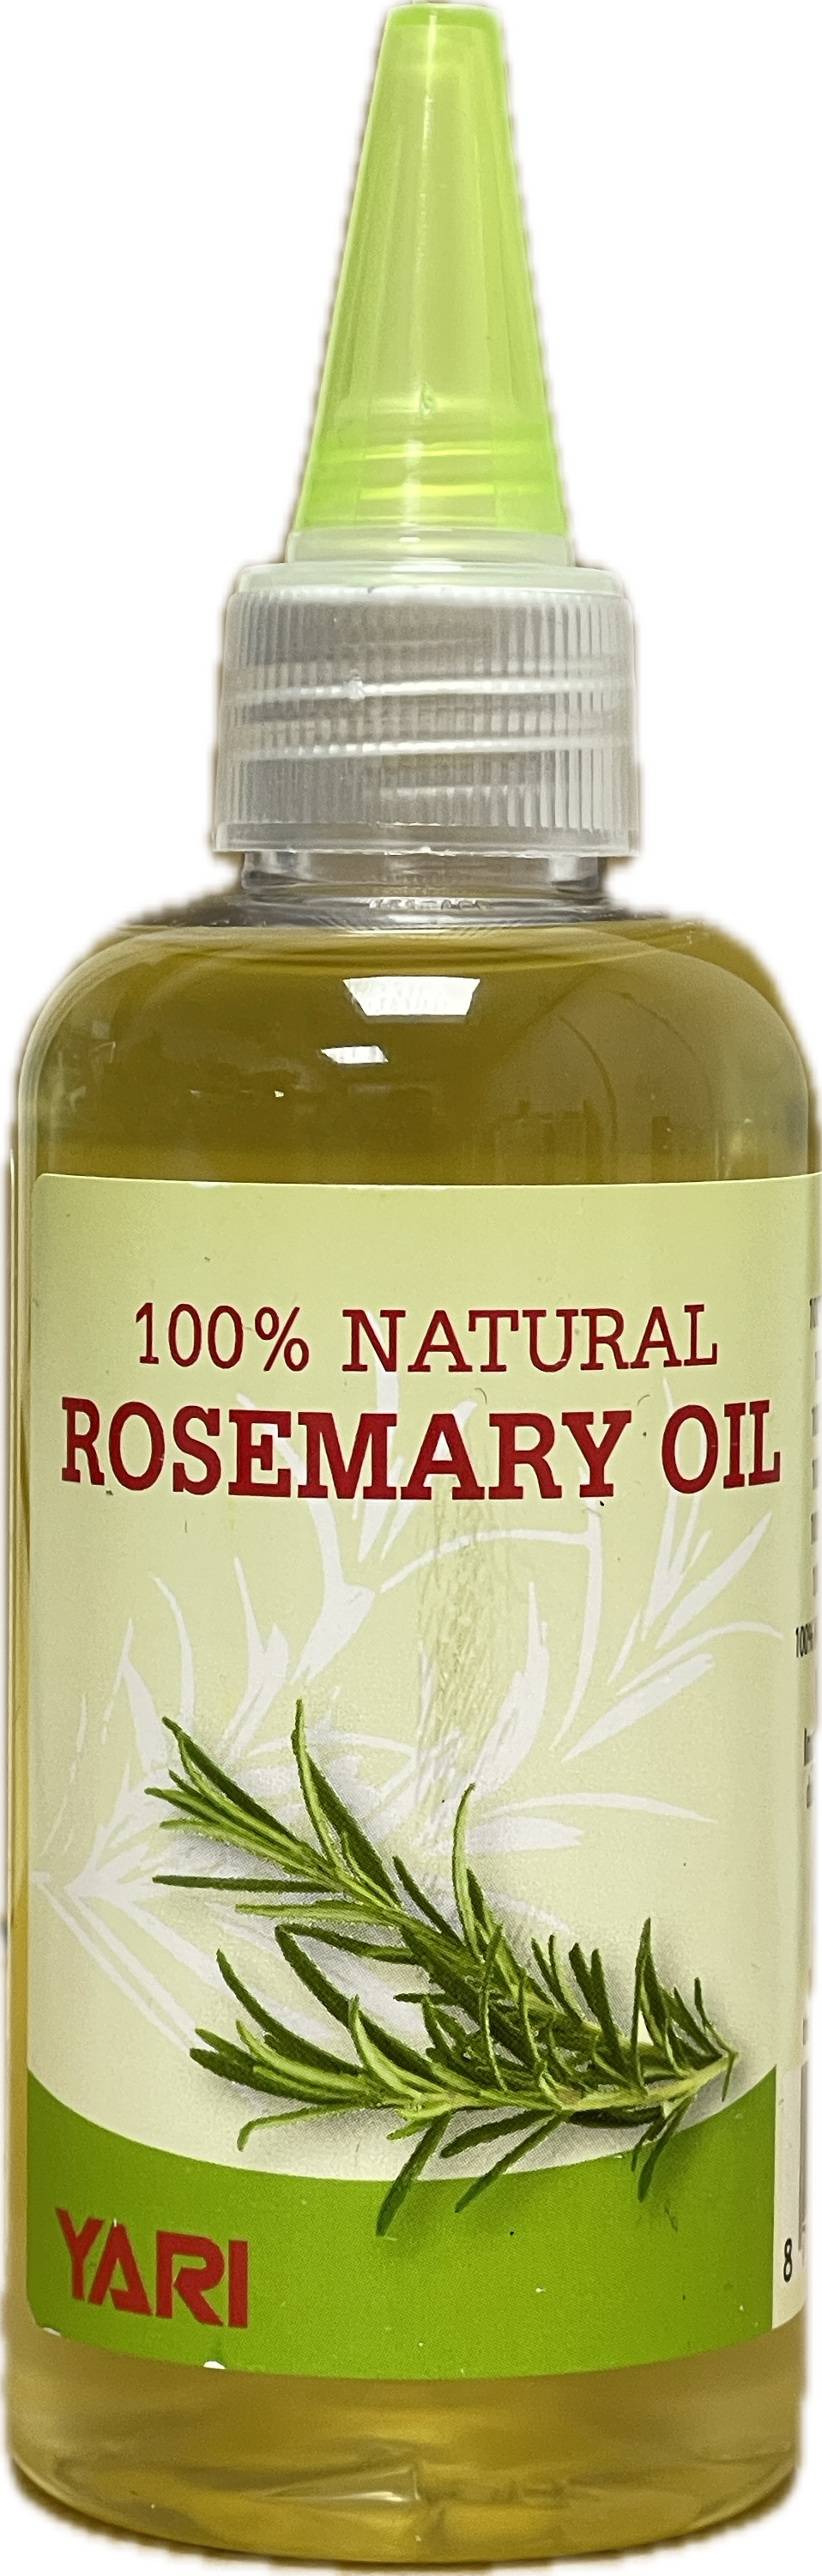 Yari - 100% Natural Rosemary (105ml)